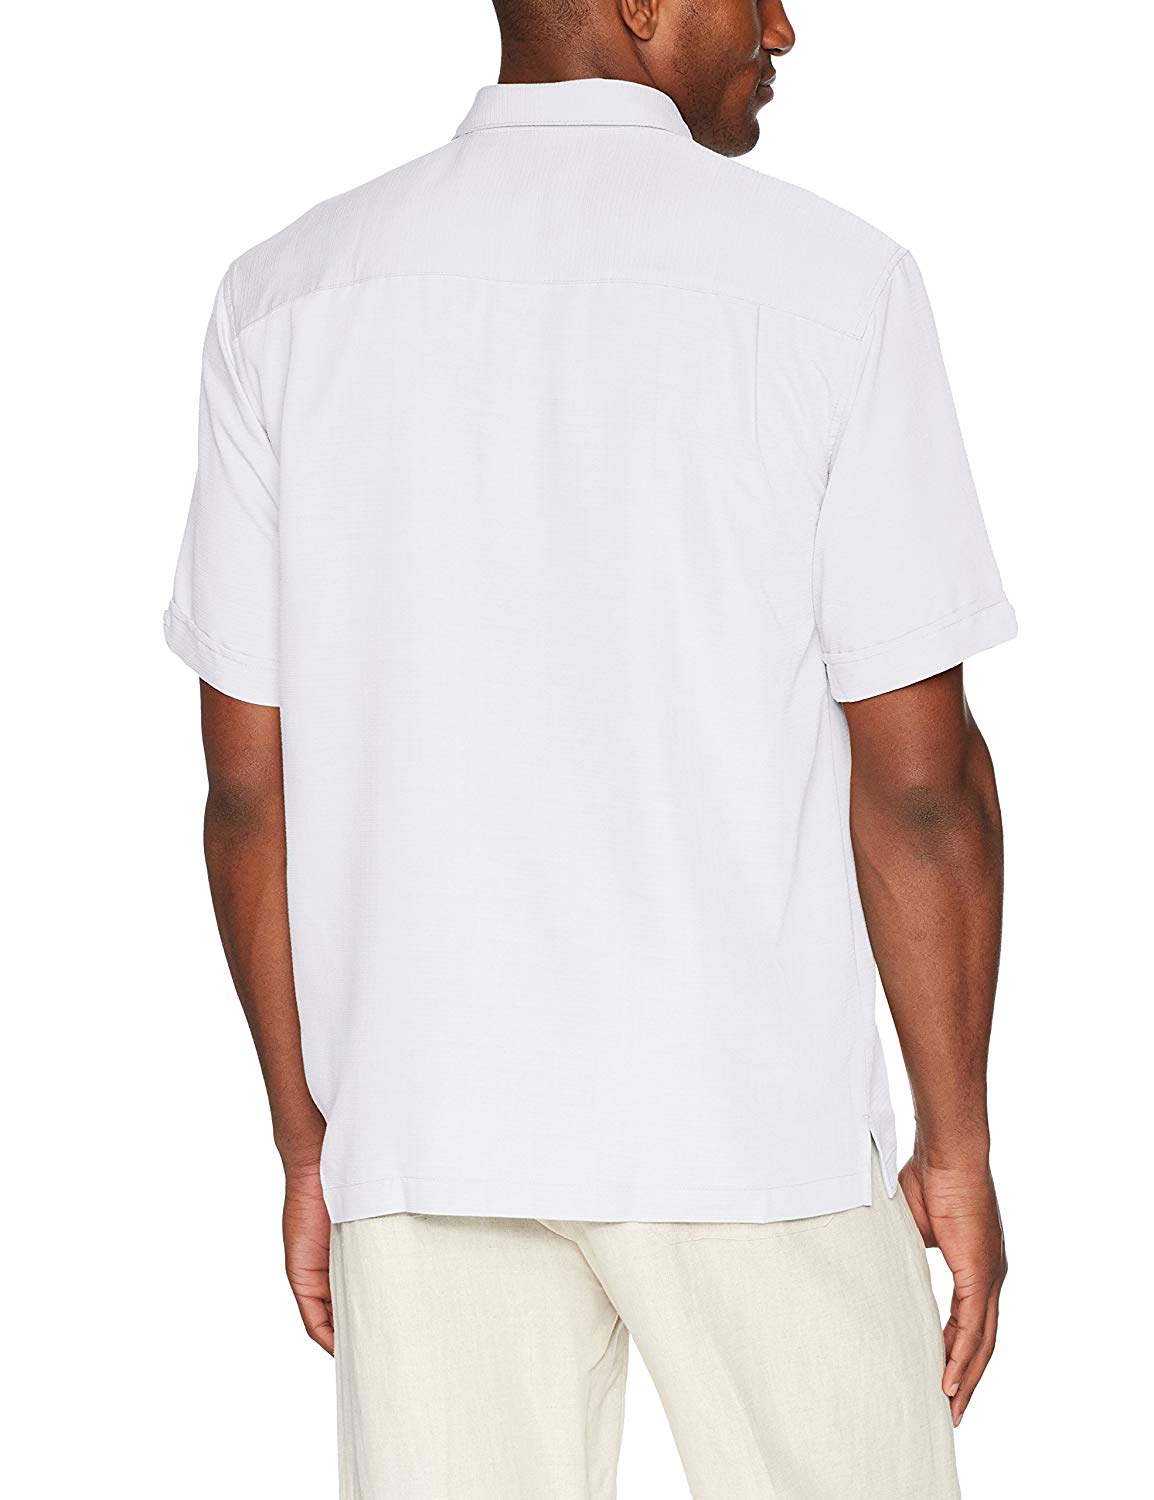 Cubavera Men's Short Sleeve Cuban Camp Shirt with Contrast, White, Size ...